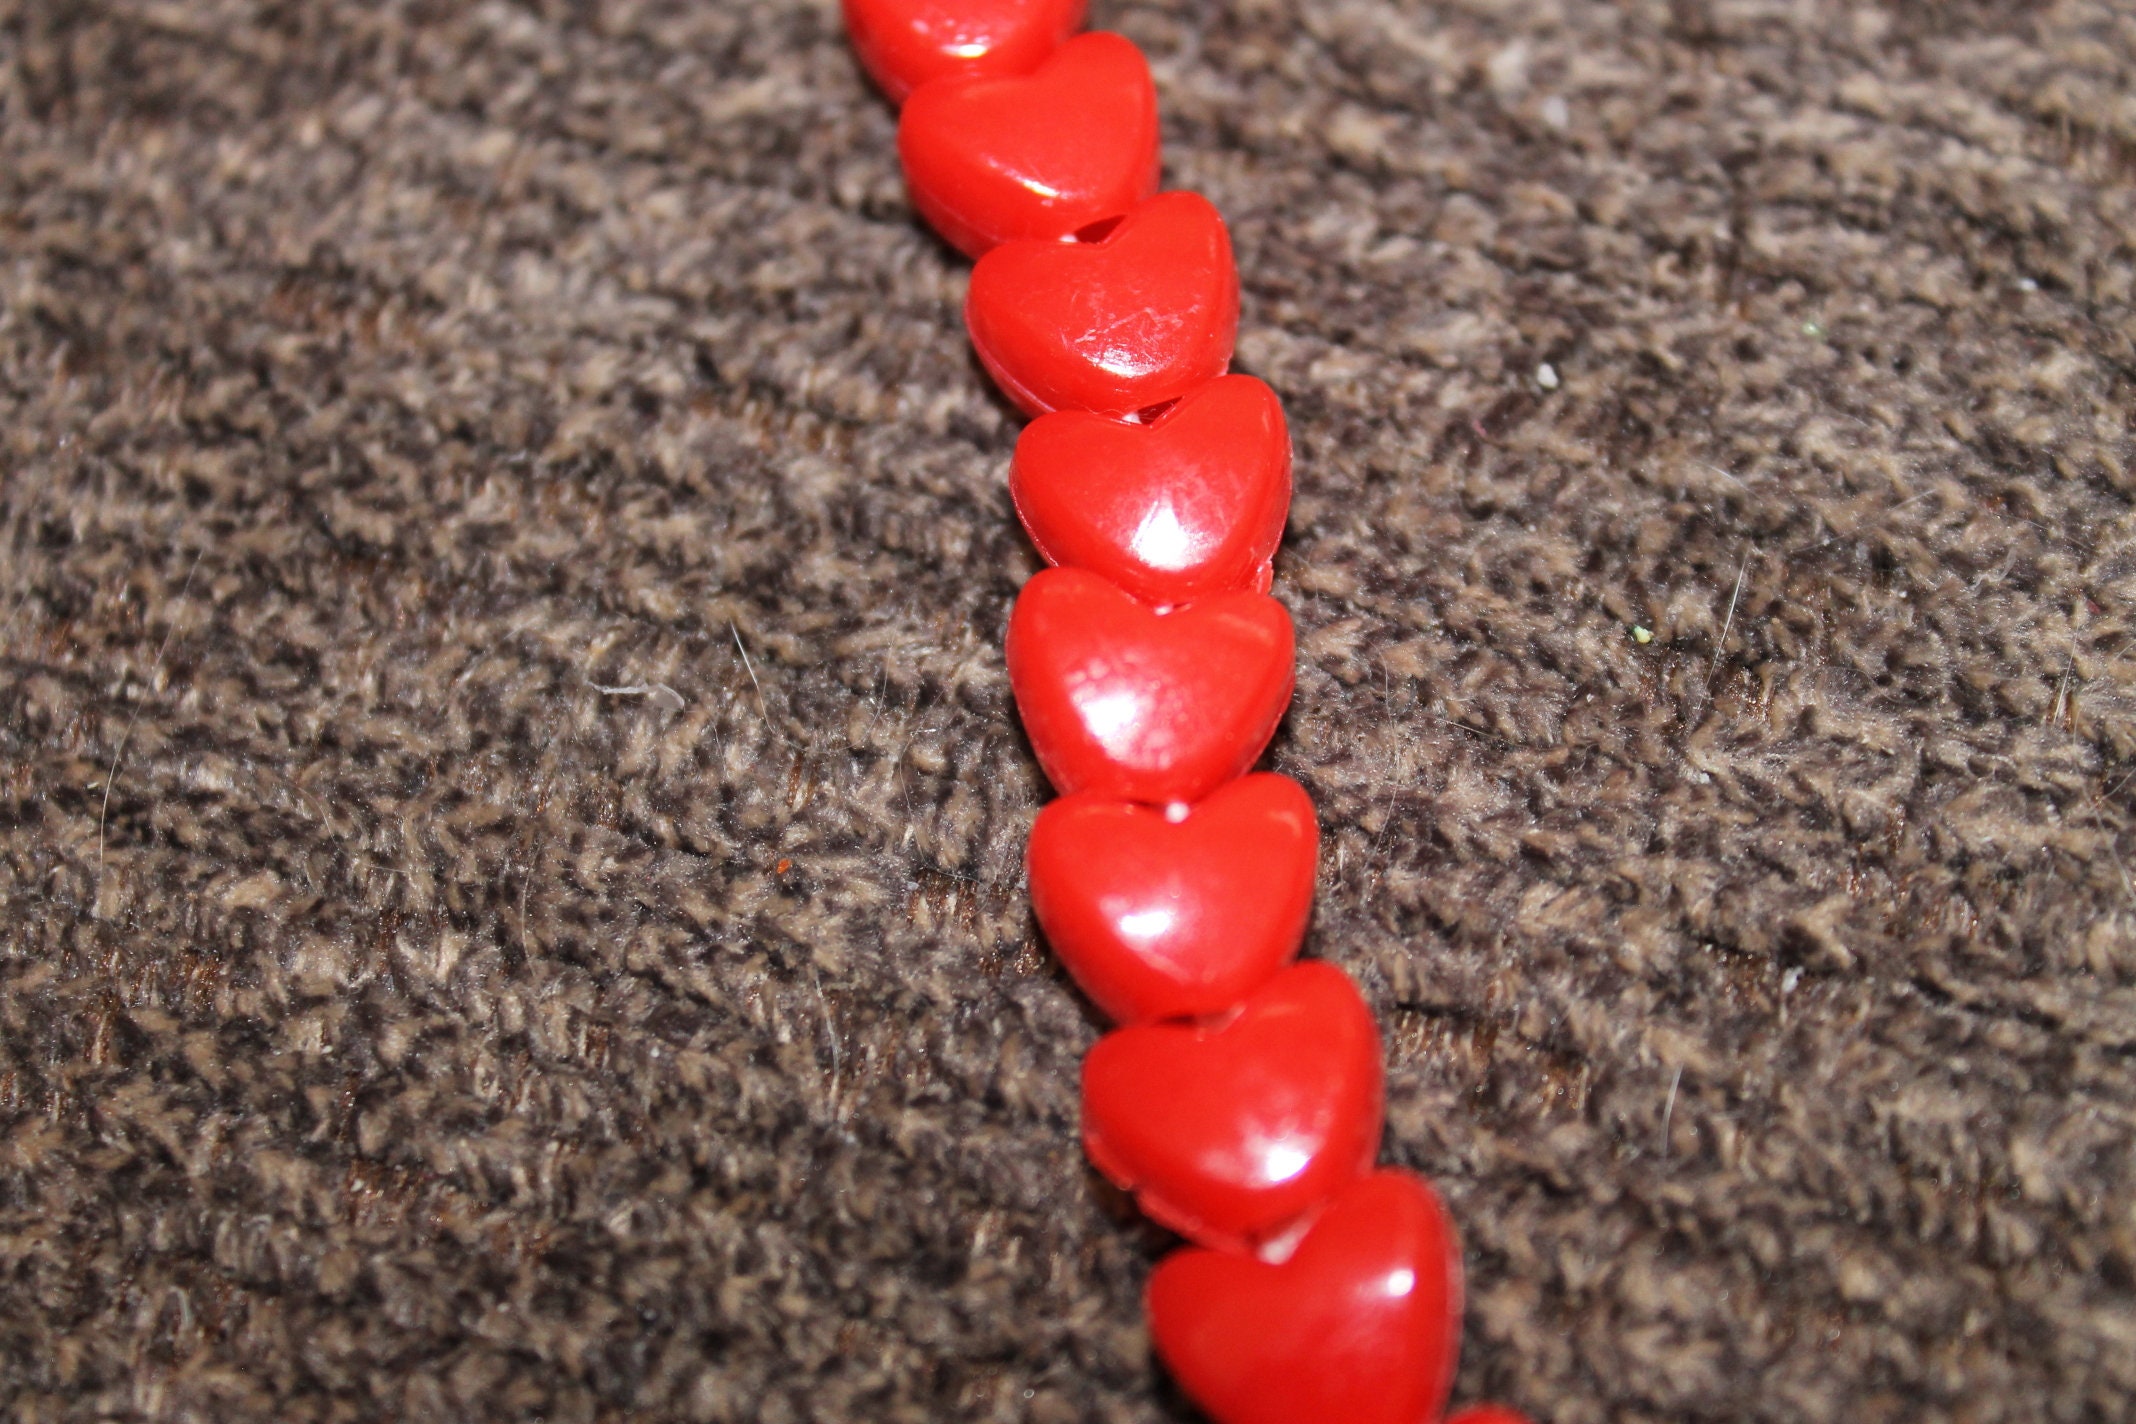 Valentine Pony Bead Bracelet – Kiley's Korner Boutique